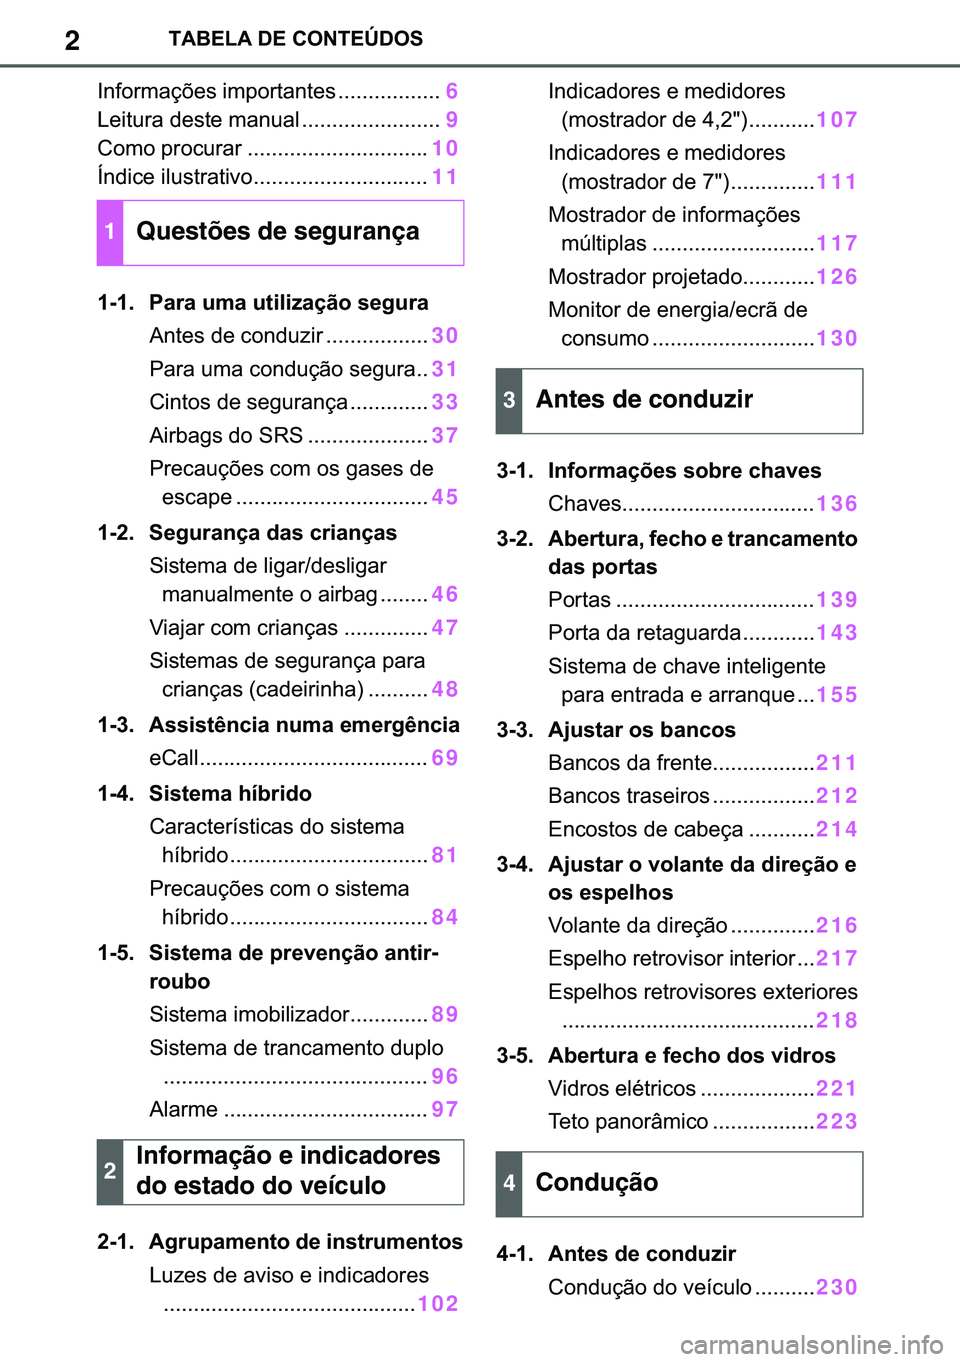 TOYOTA COROLLA HATCHBACK 2021  Manual de utilização (in Portuguese) 2�7�$�%�(�/�$���(��&�2�1�7�(�Ò��2�6
�,�Q�I�R�U�P�D�o�}�H�V��L�P�S�R�U�W�D�Q�W�H�V �����������������6
�/�H�L�W�X�U�D��G�H�V�W�H��P�D�Q�X�D�O ������������������